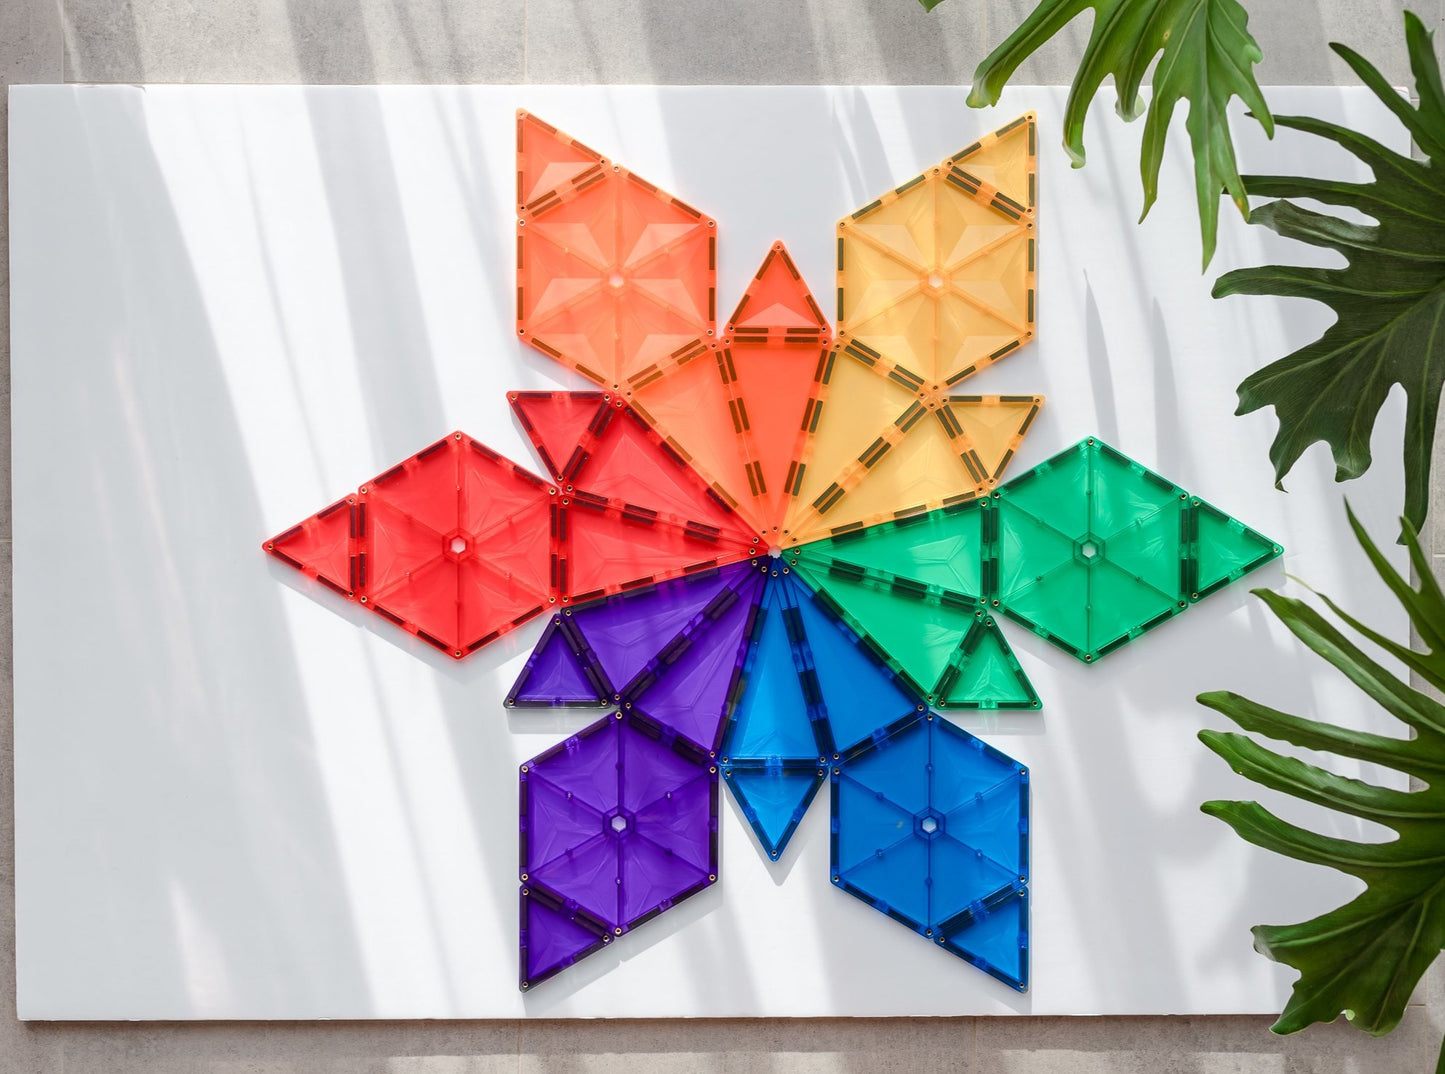 Connetix Rainbow 30 Piece Geometry Pack